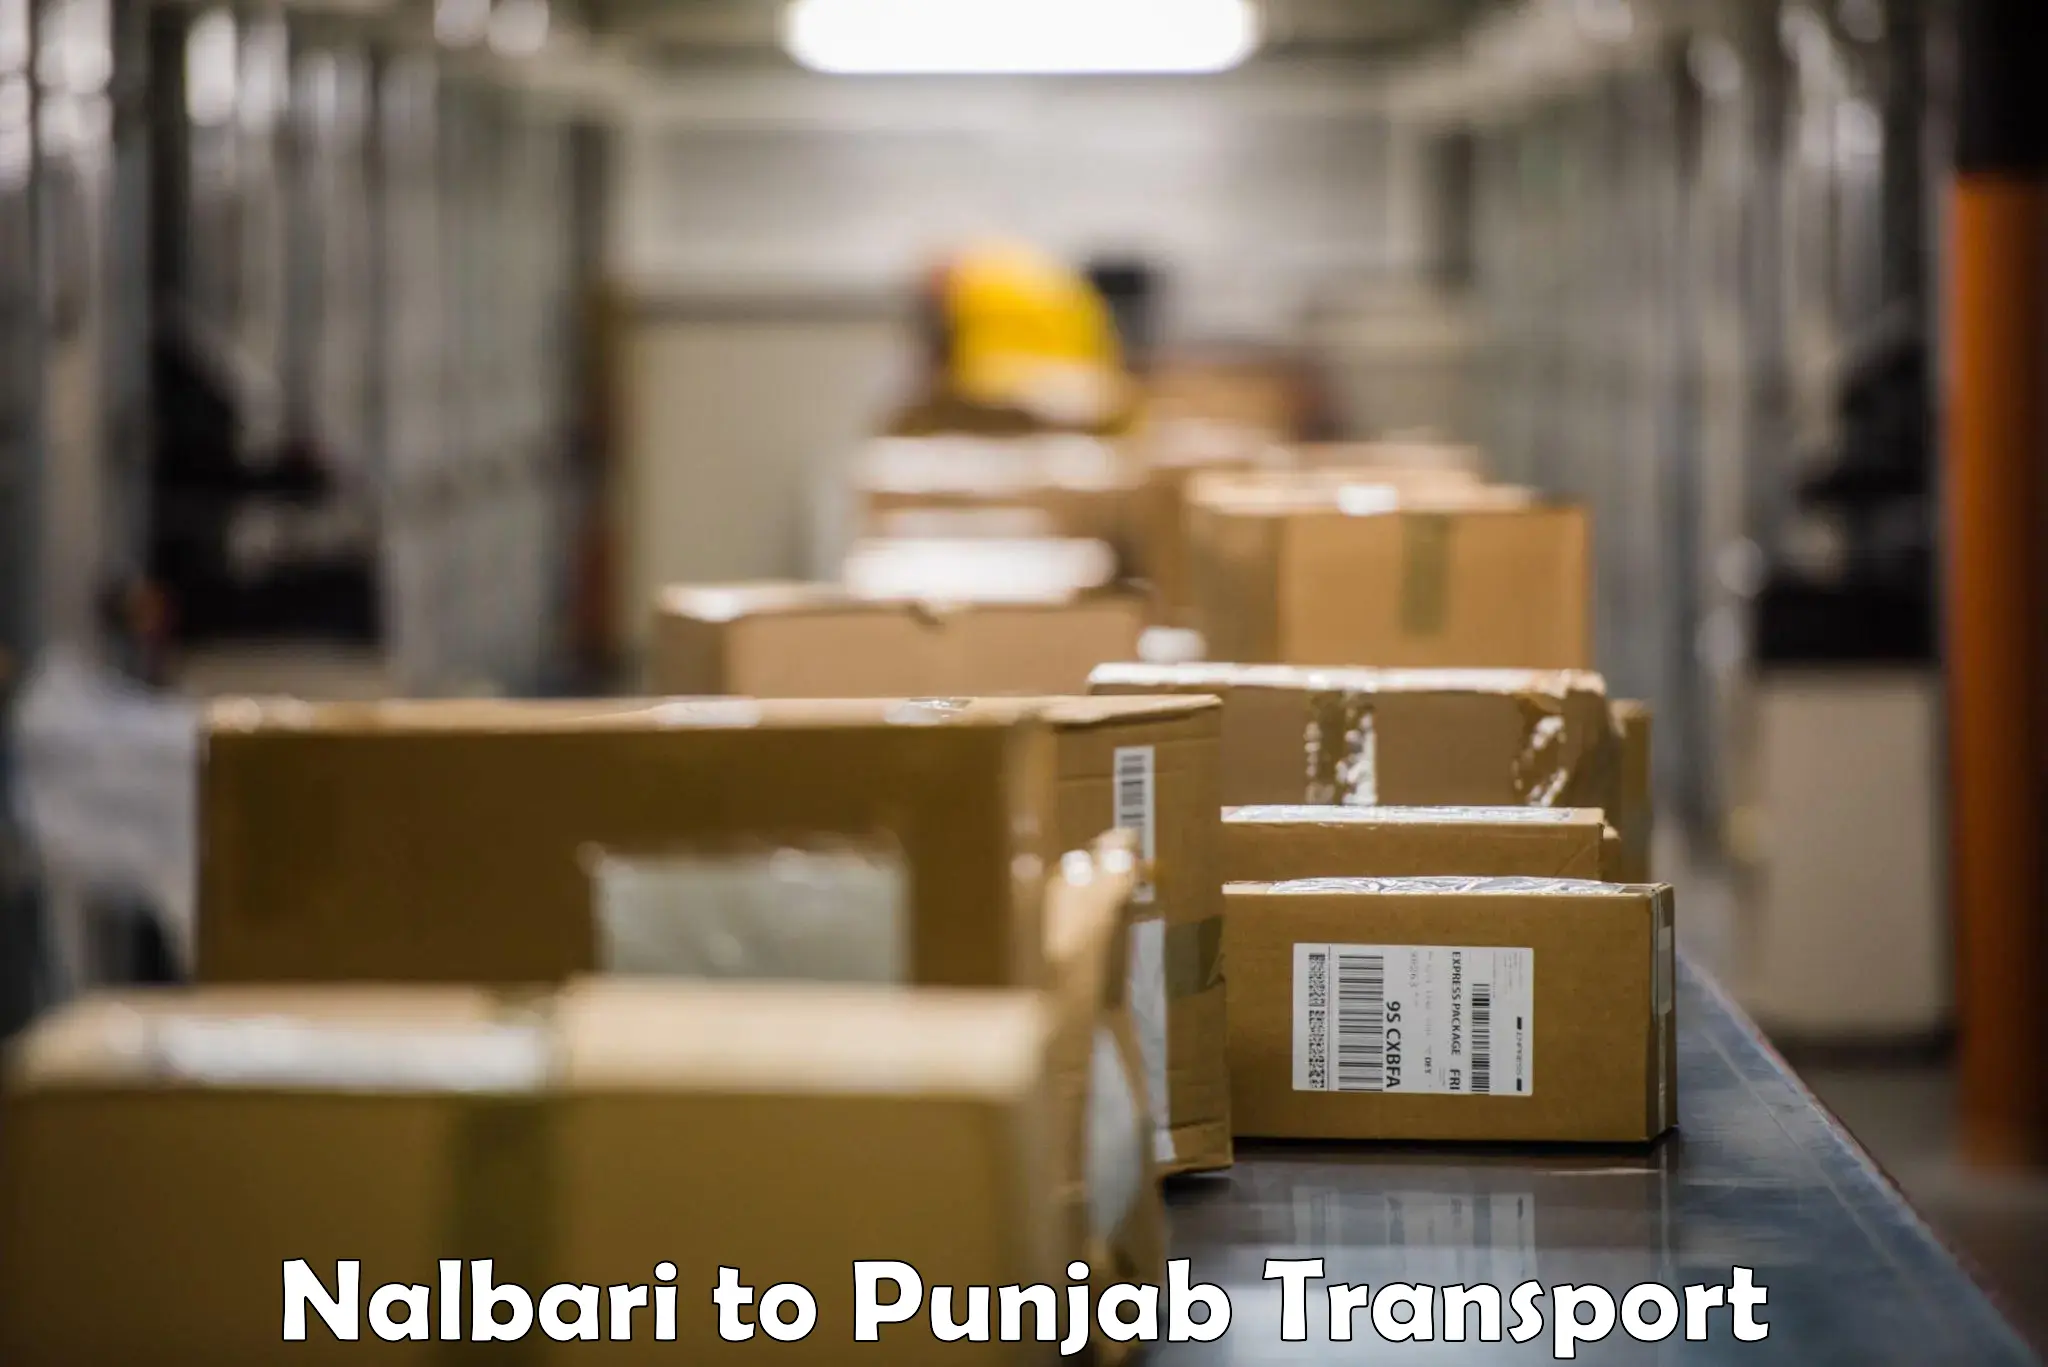 Delivery service Nalbari to Dhilwan